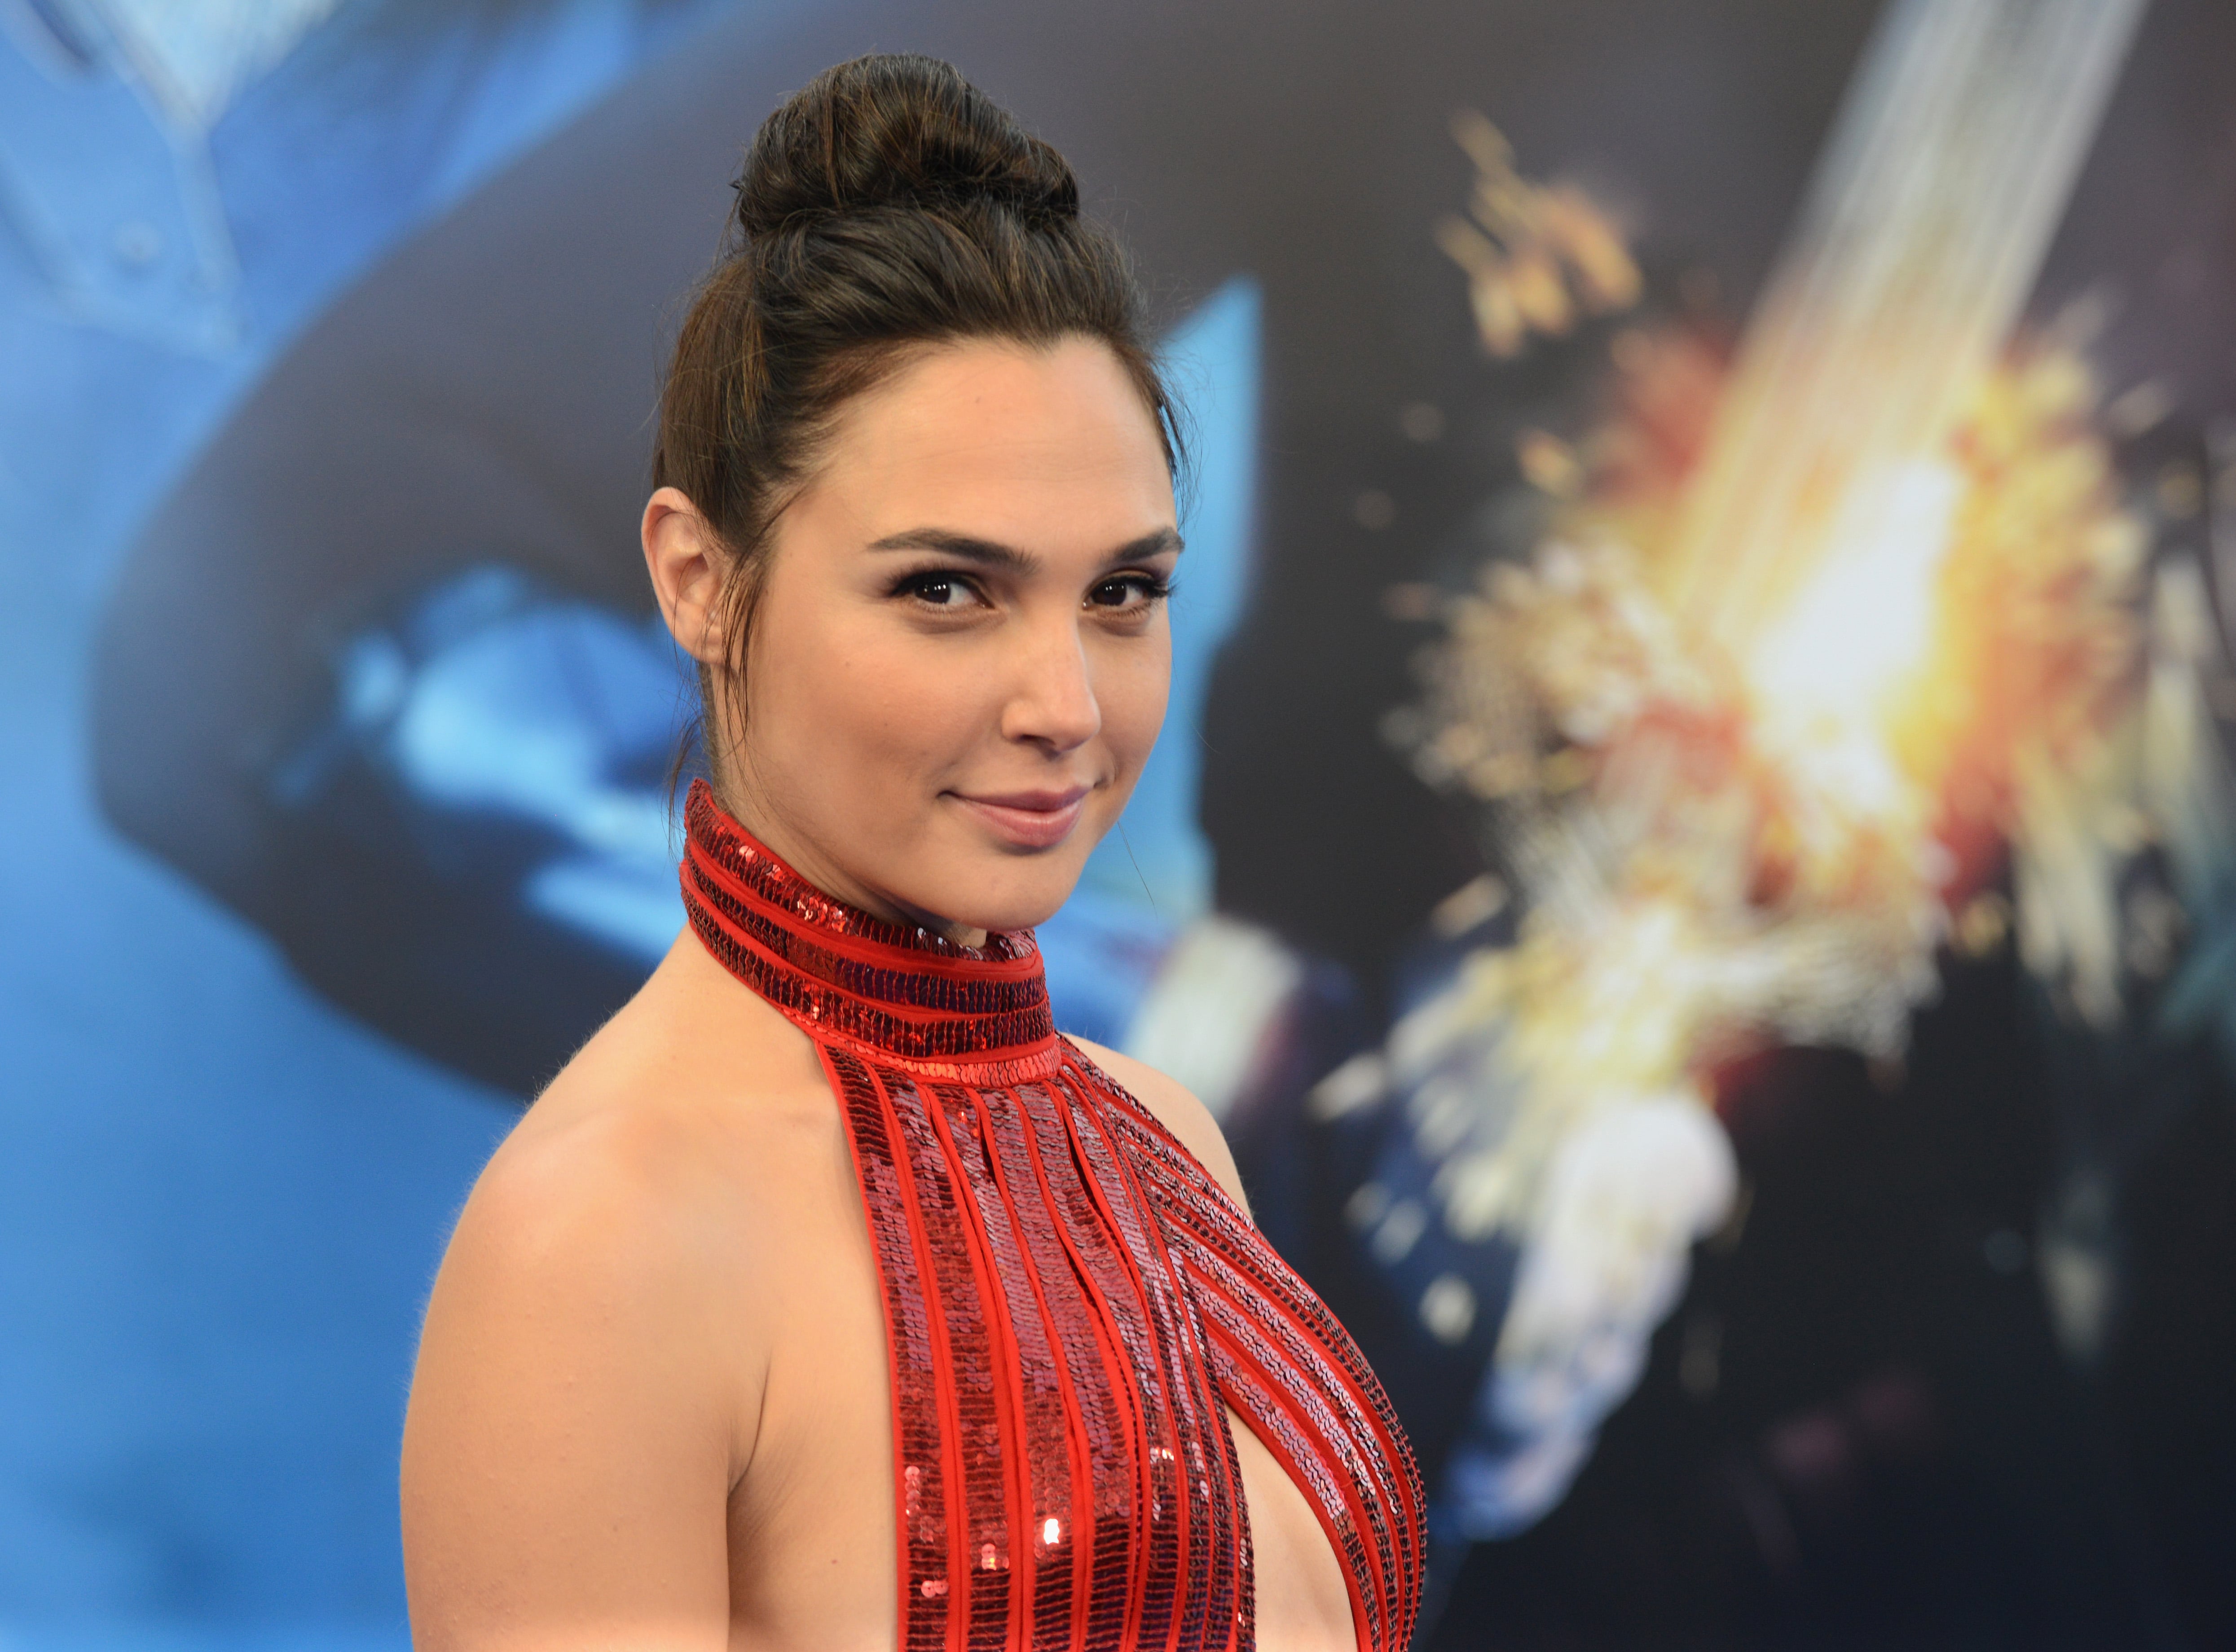 Gal Gadot thanks cast, crew as new 'Wonder Woman' wraps